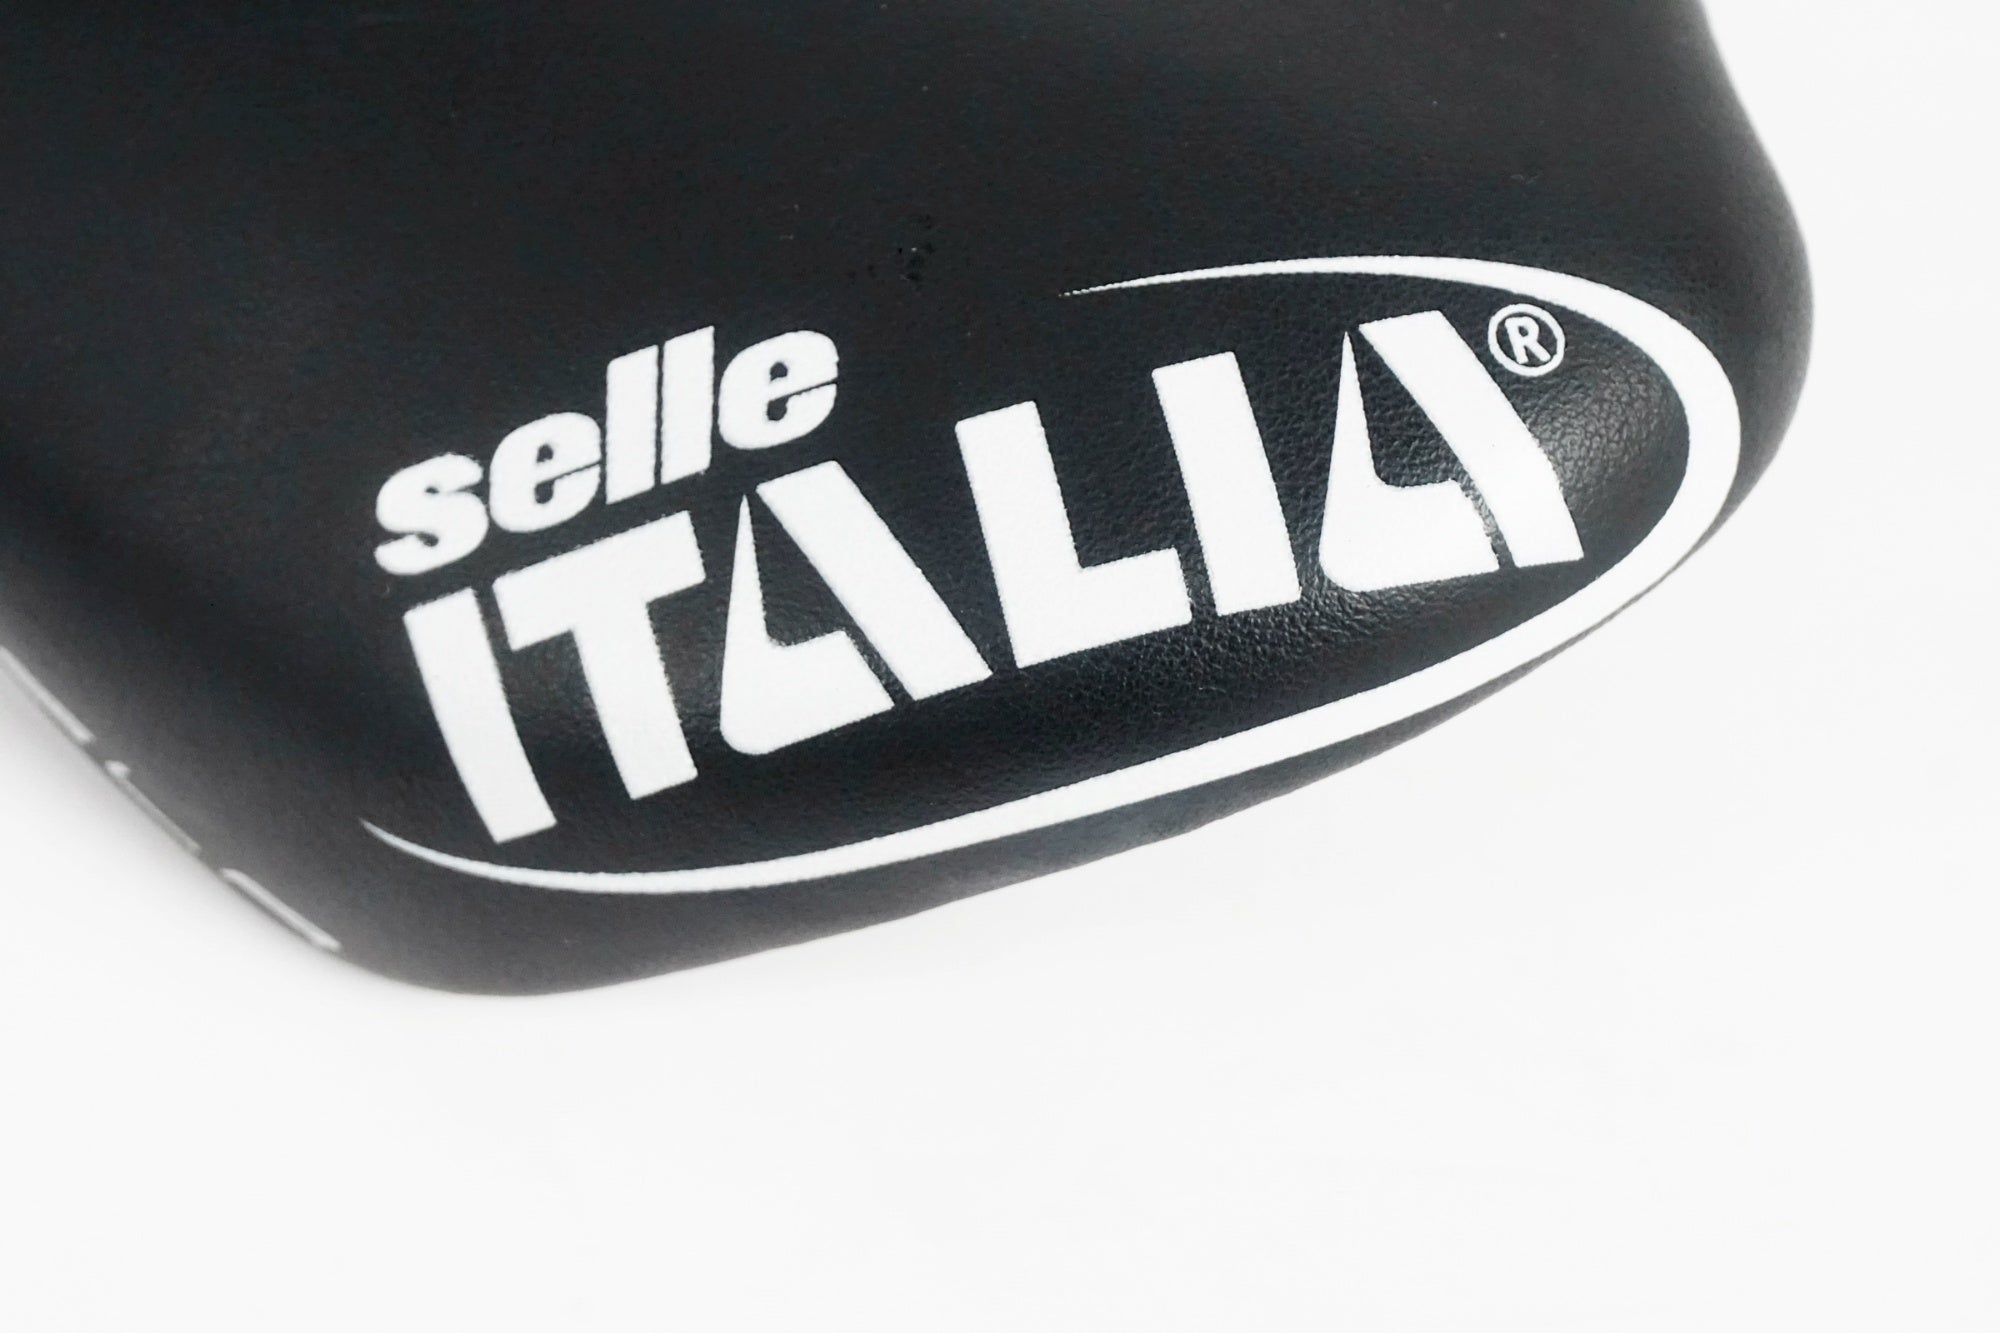 SELLE ITALIA 「セライタリア」 SLR TEAM EDITION サドル / 名古屋大須店